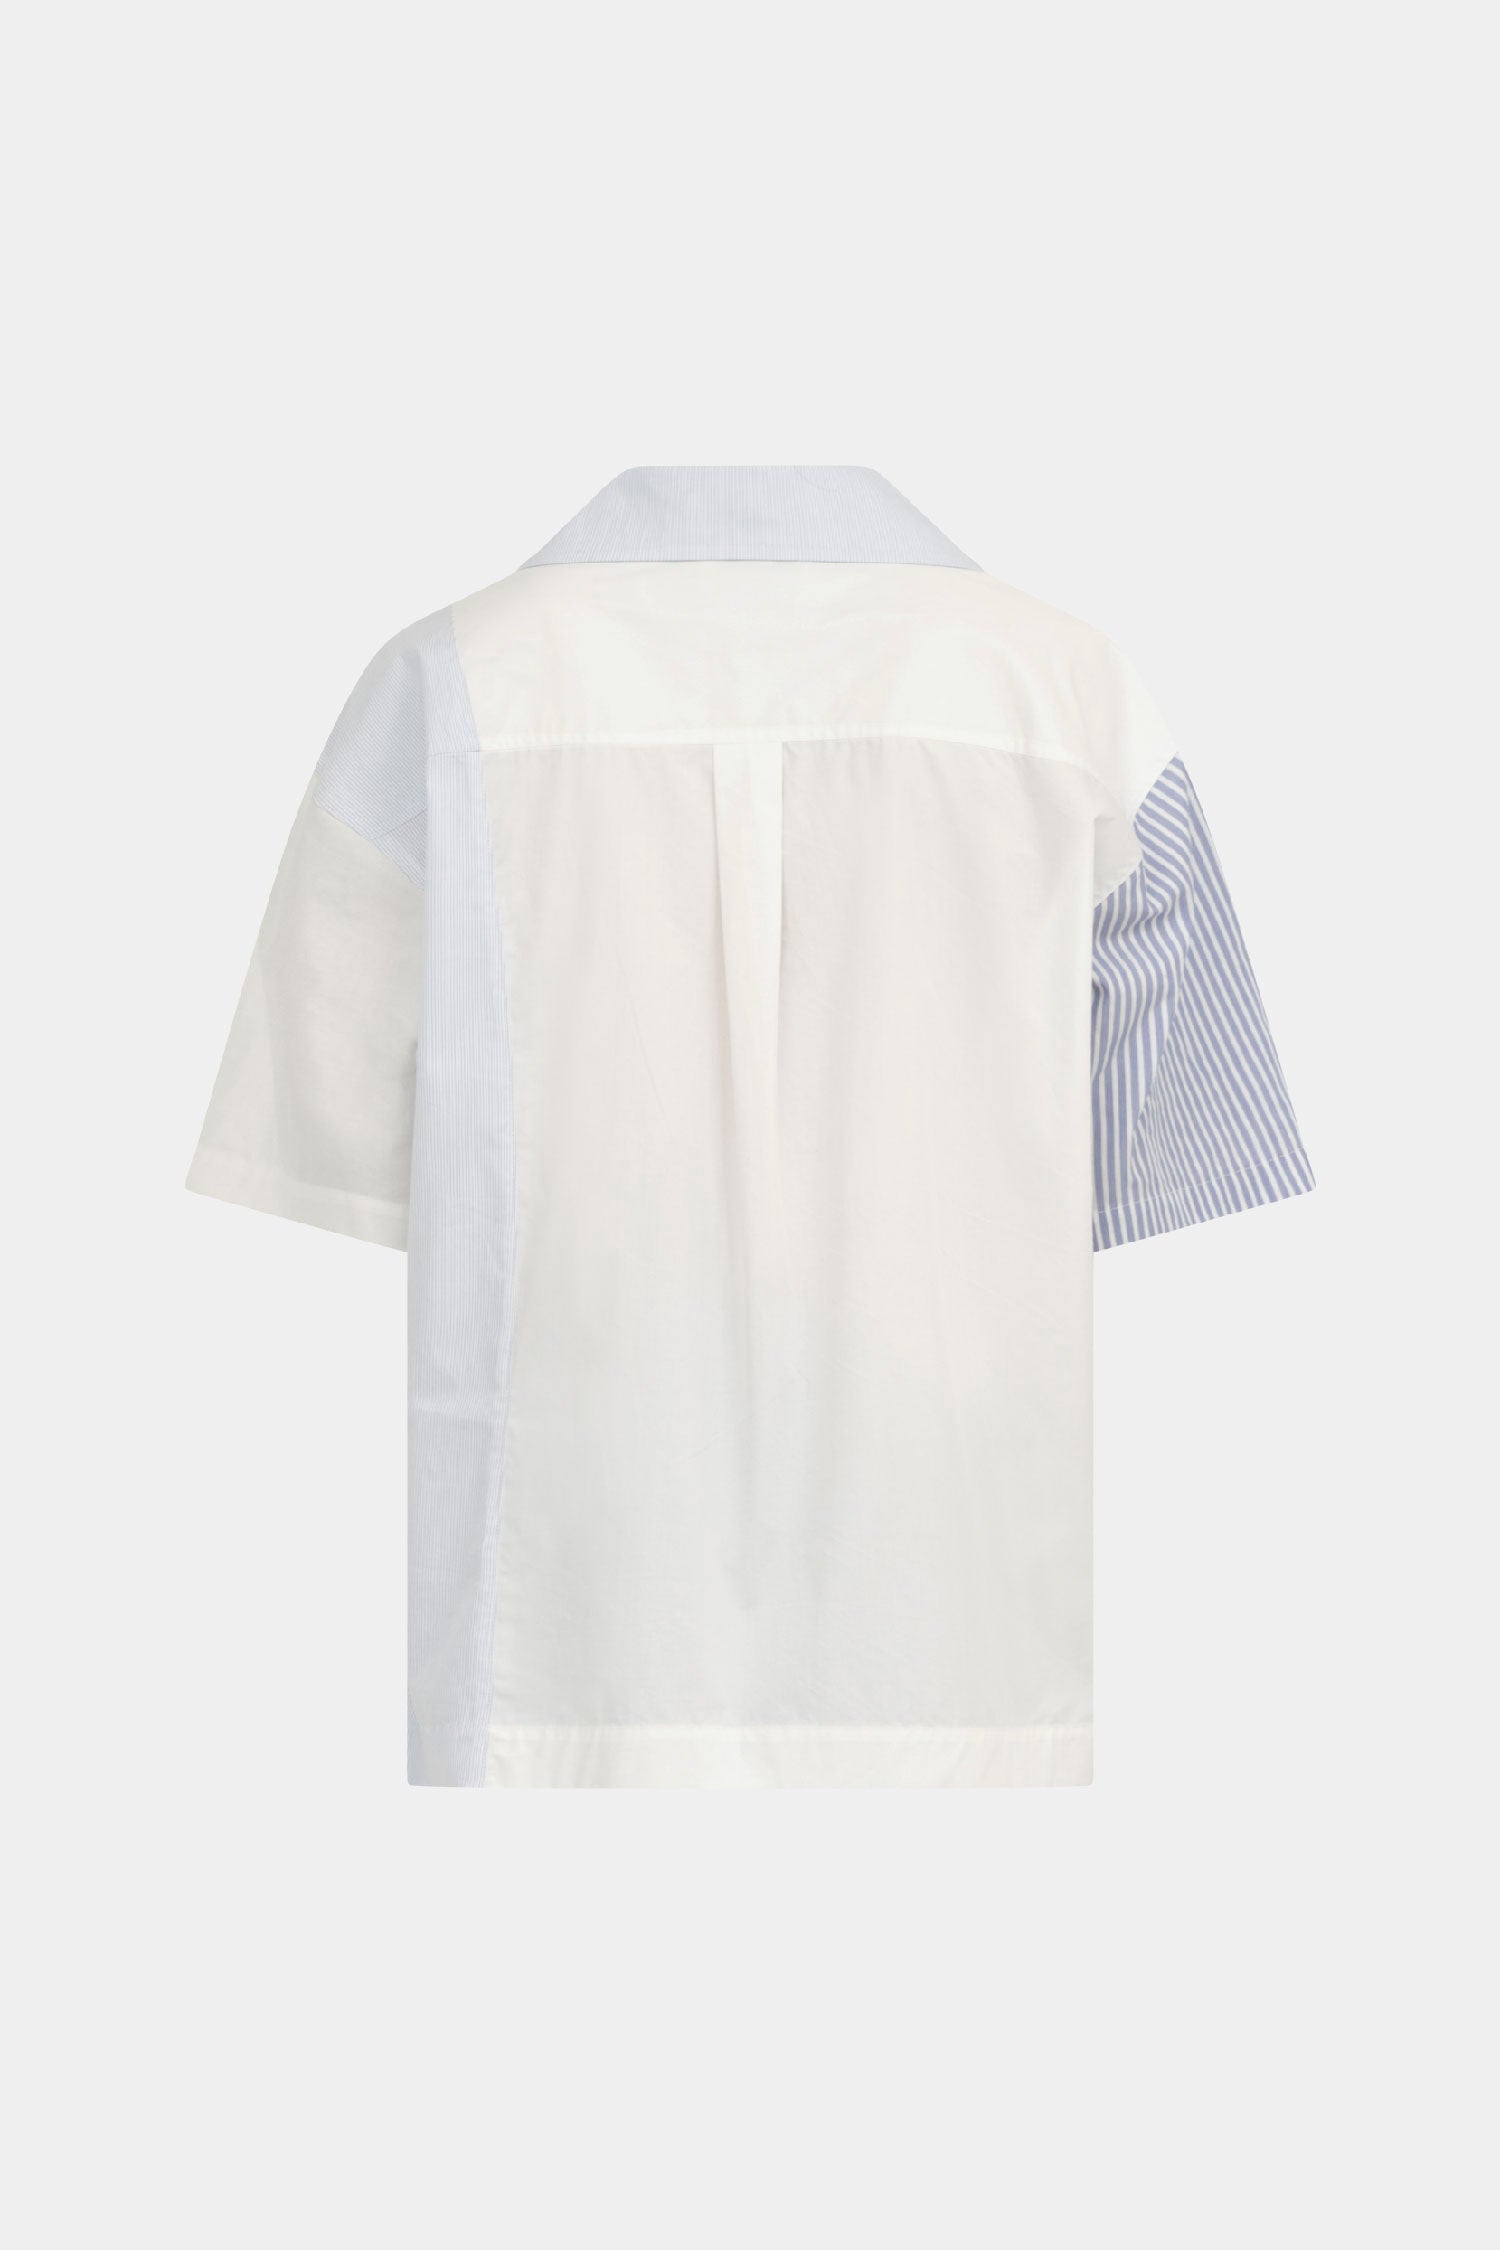 Selectshop FRAME - FENG CHEN WANG Multi Stripe Patchwork Shirt Shirts Concept Store Dubai